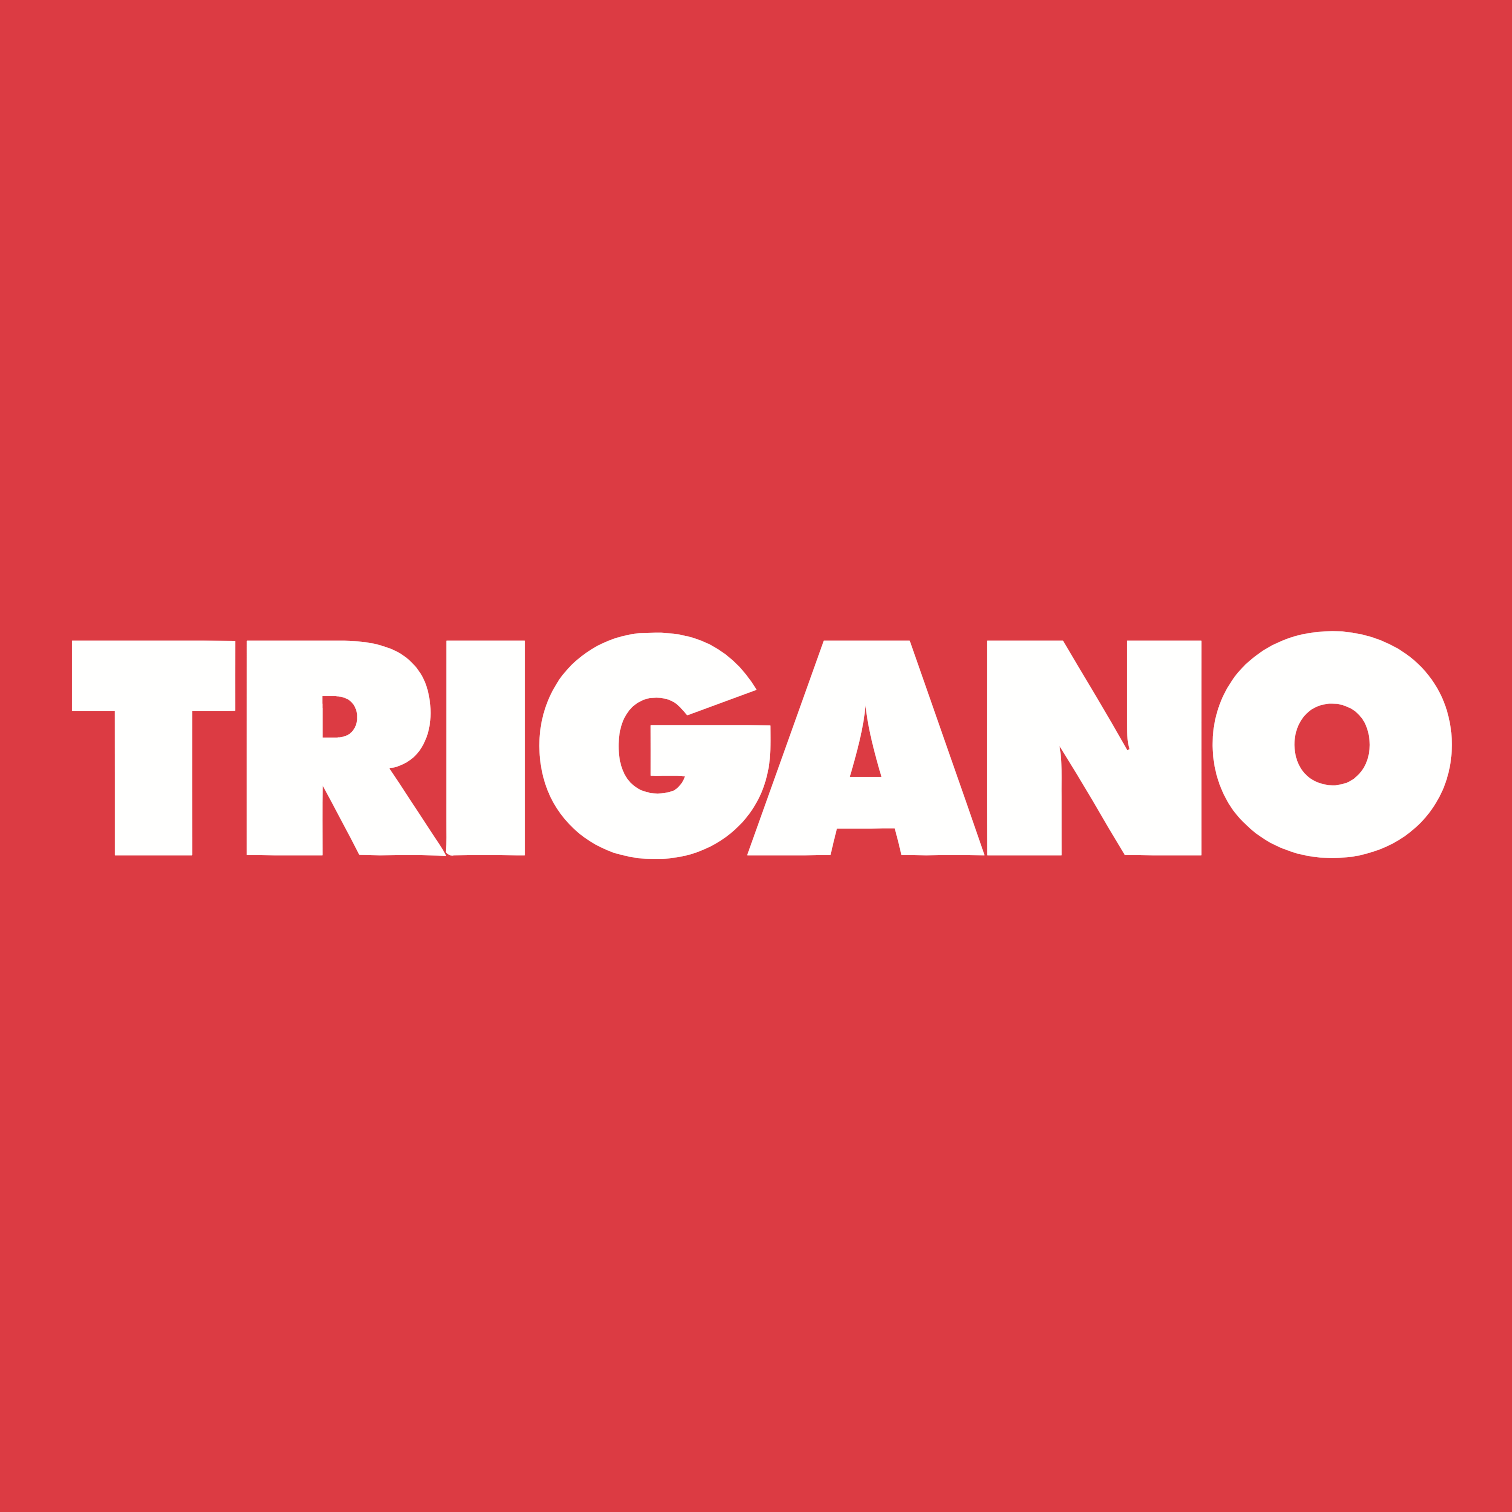 Trigano logo large (transparent PNG)